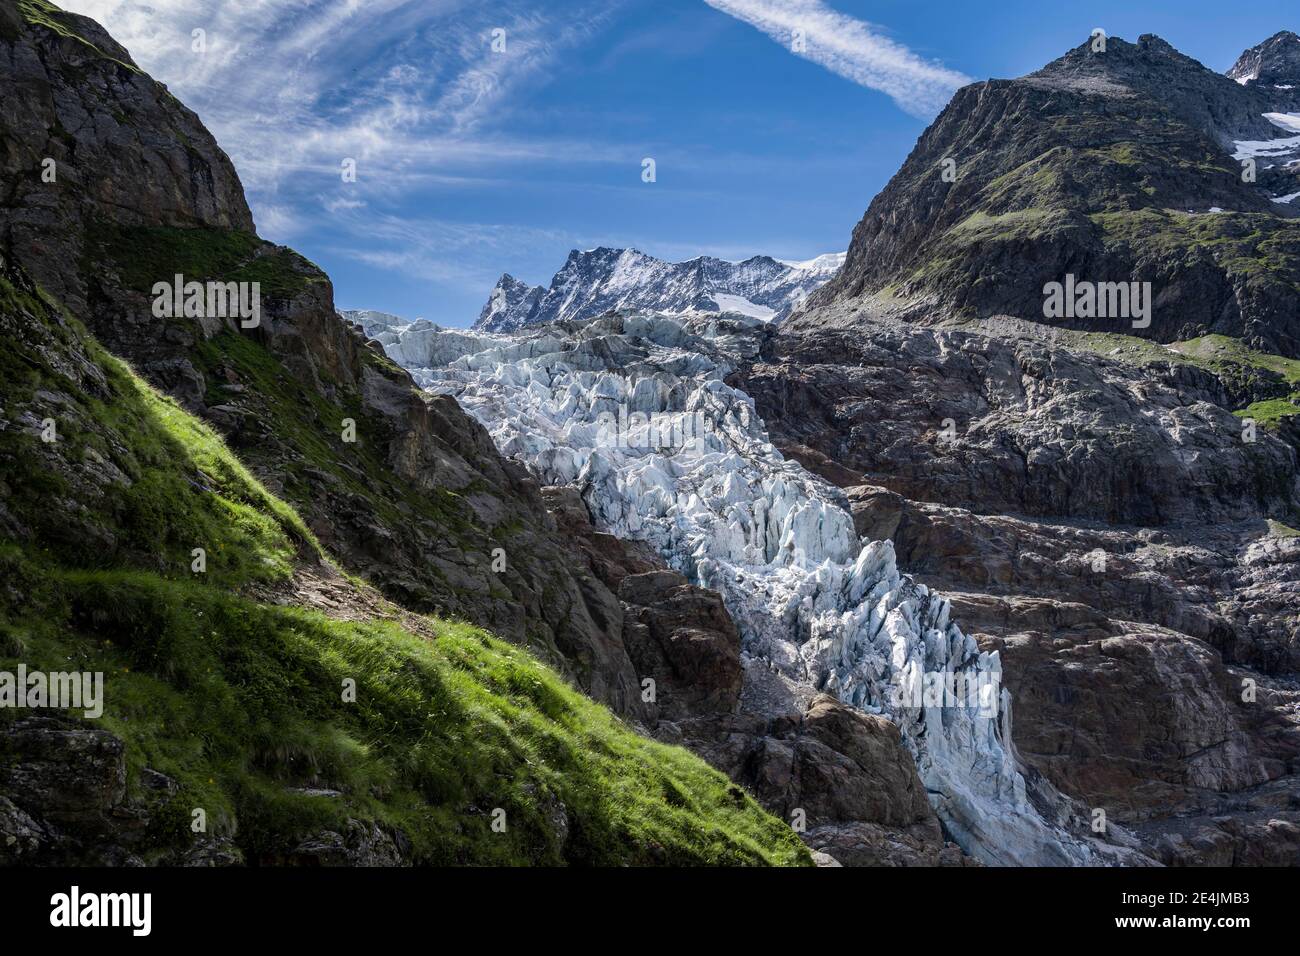 High alpine mountain landscape, Lower Arctic Ocean, glacier tongue, Bernese Oberland, Switzerland Stock Photo